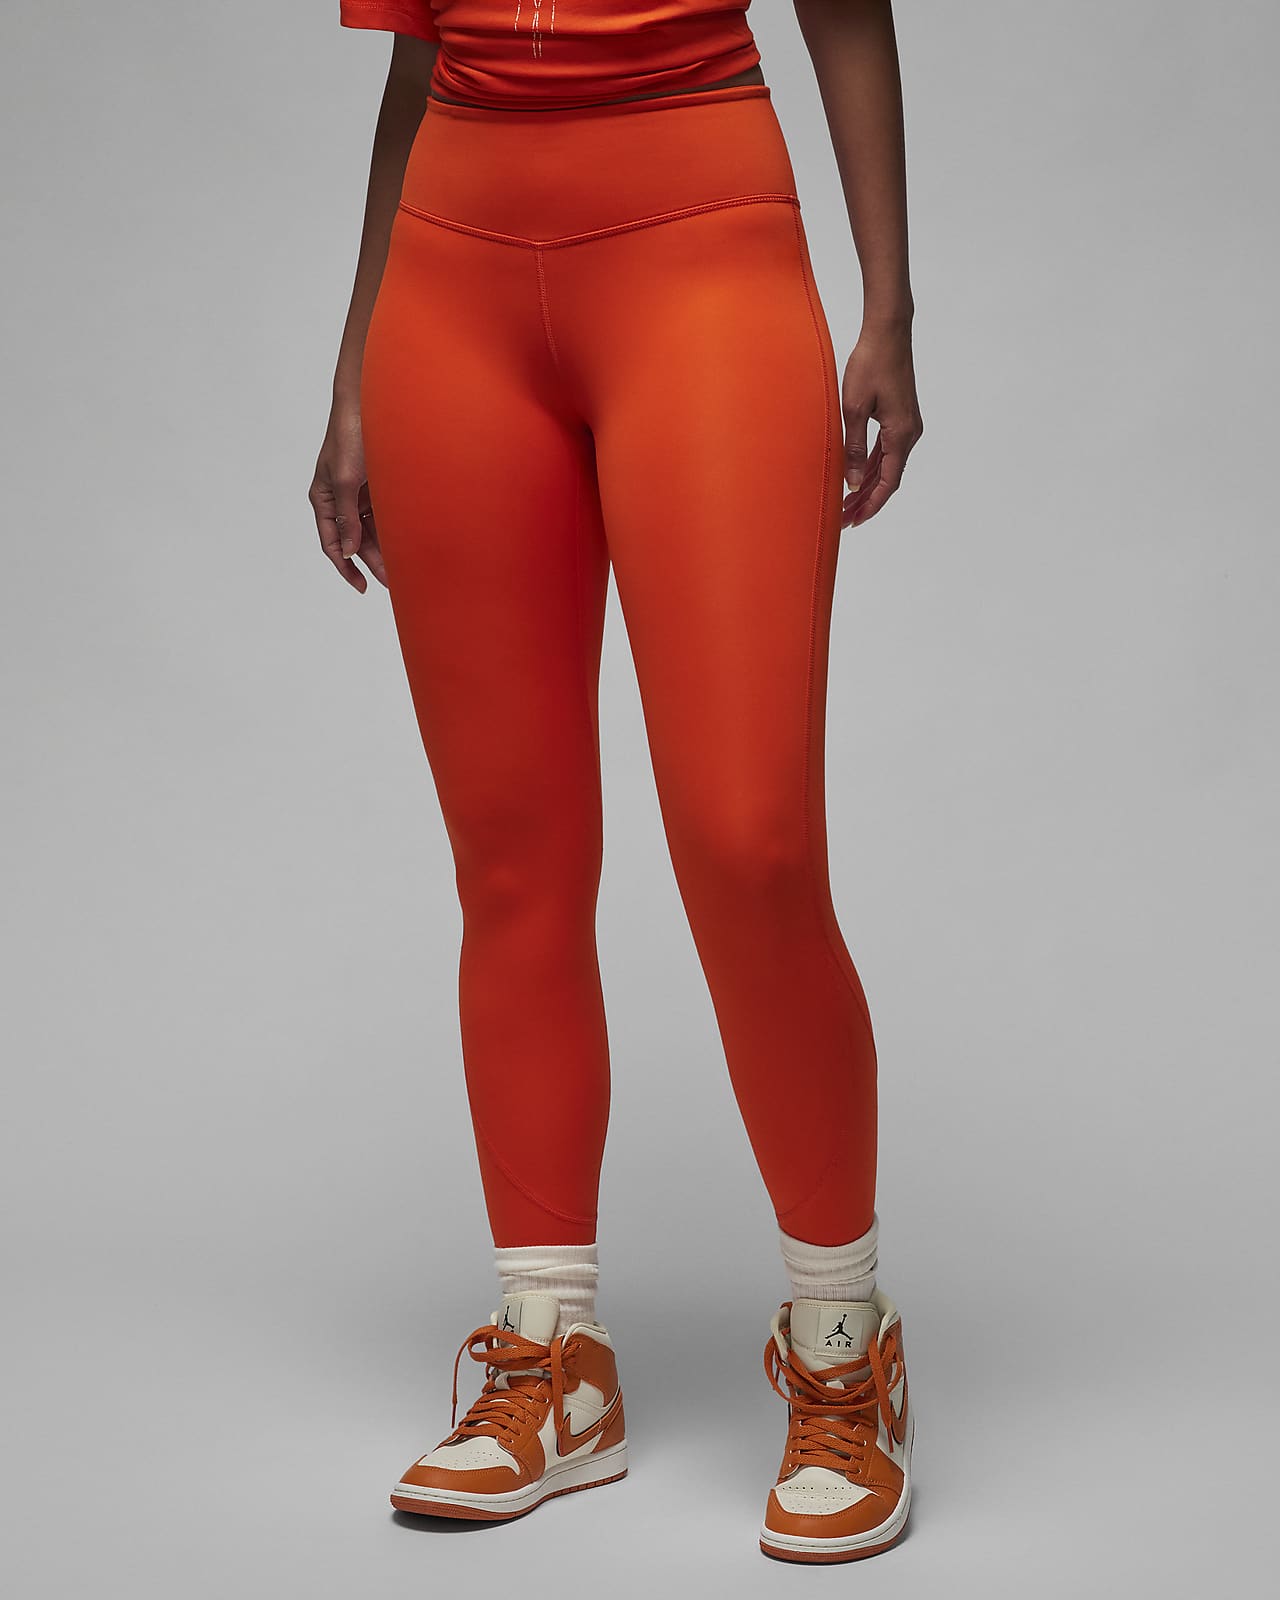 Women's Leggings & Tights. Nike IL